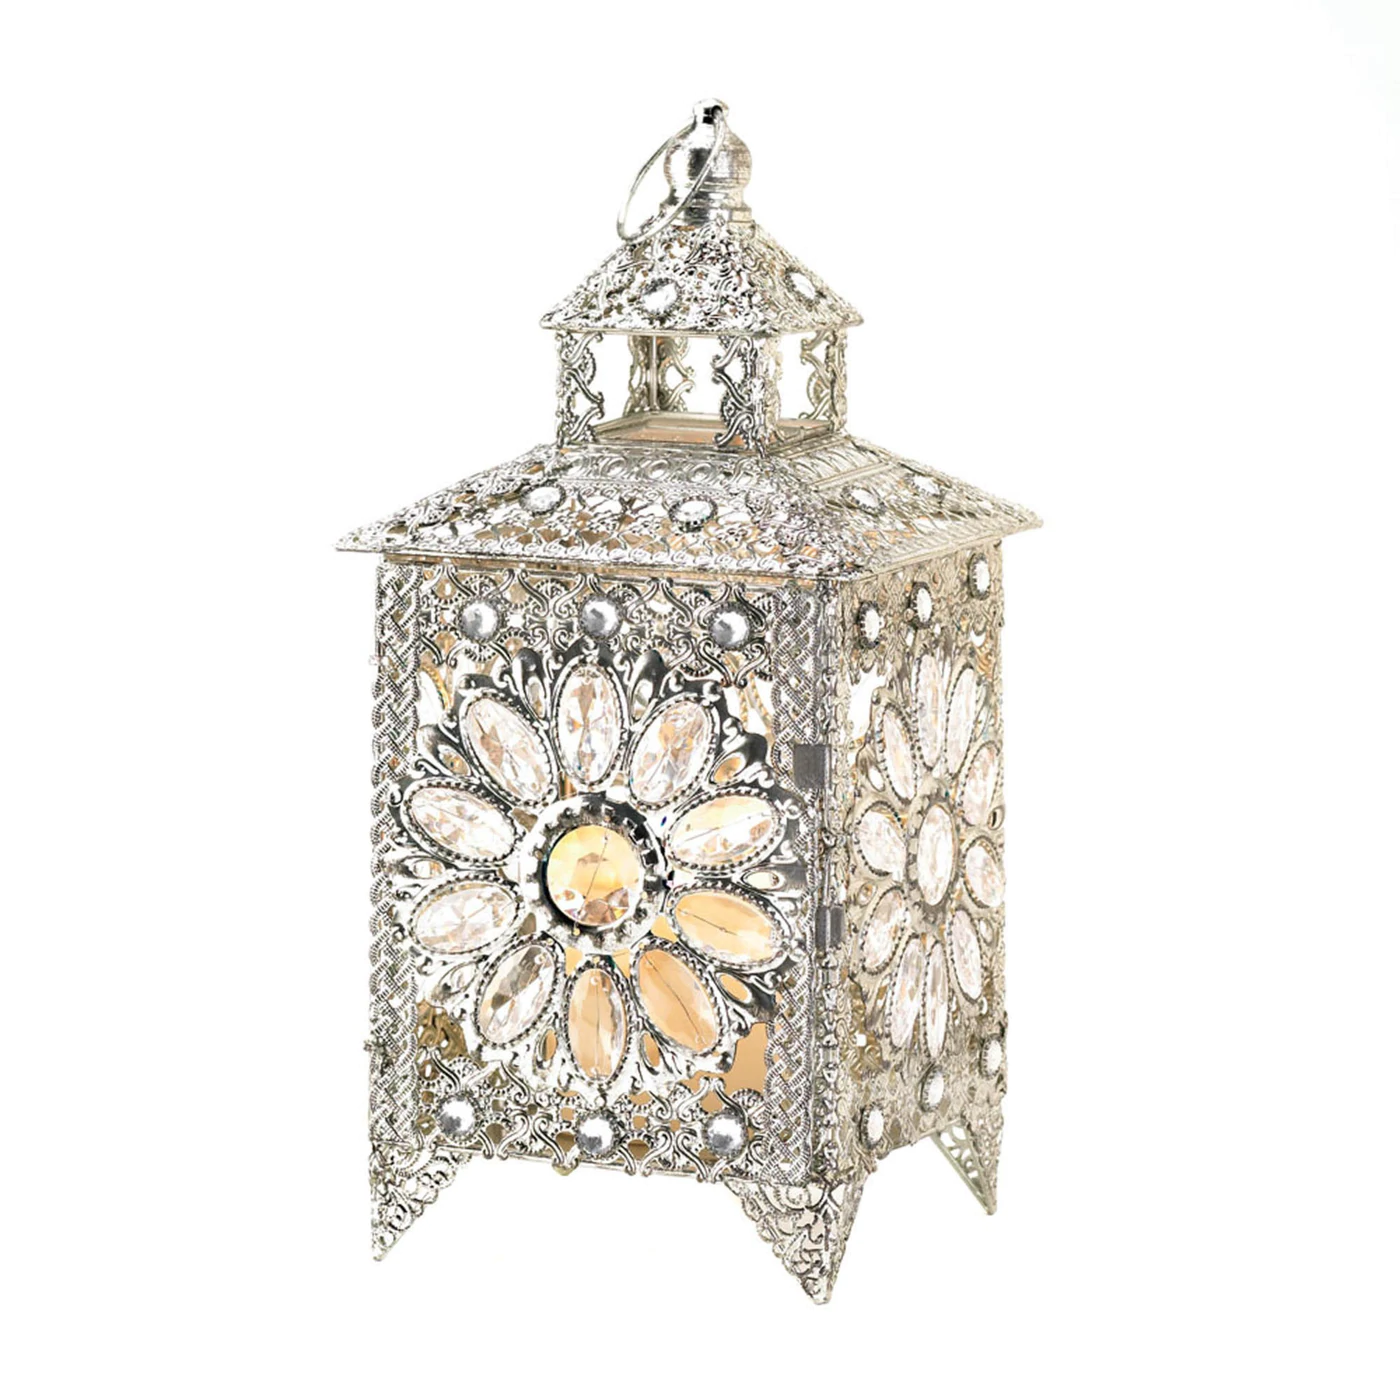 Crown Jewels Candle Lantern - $60.00